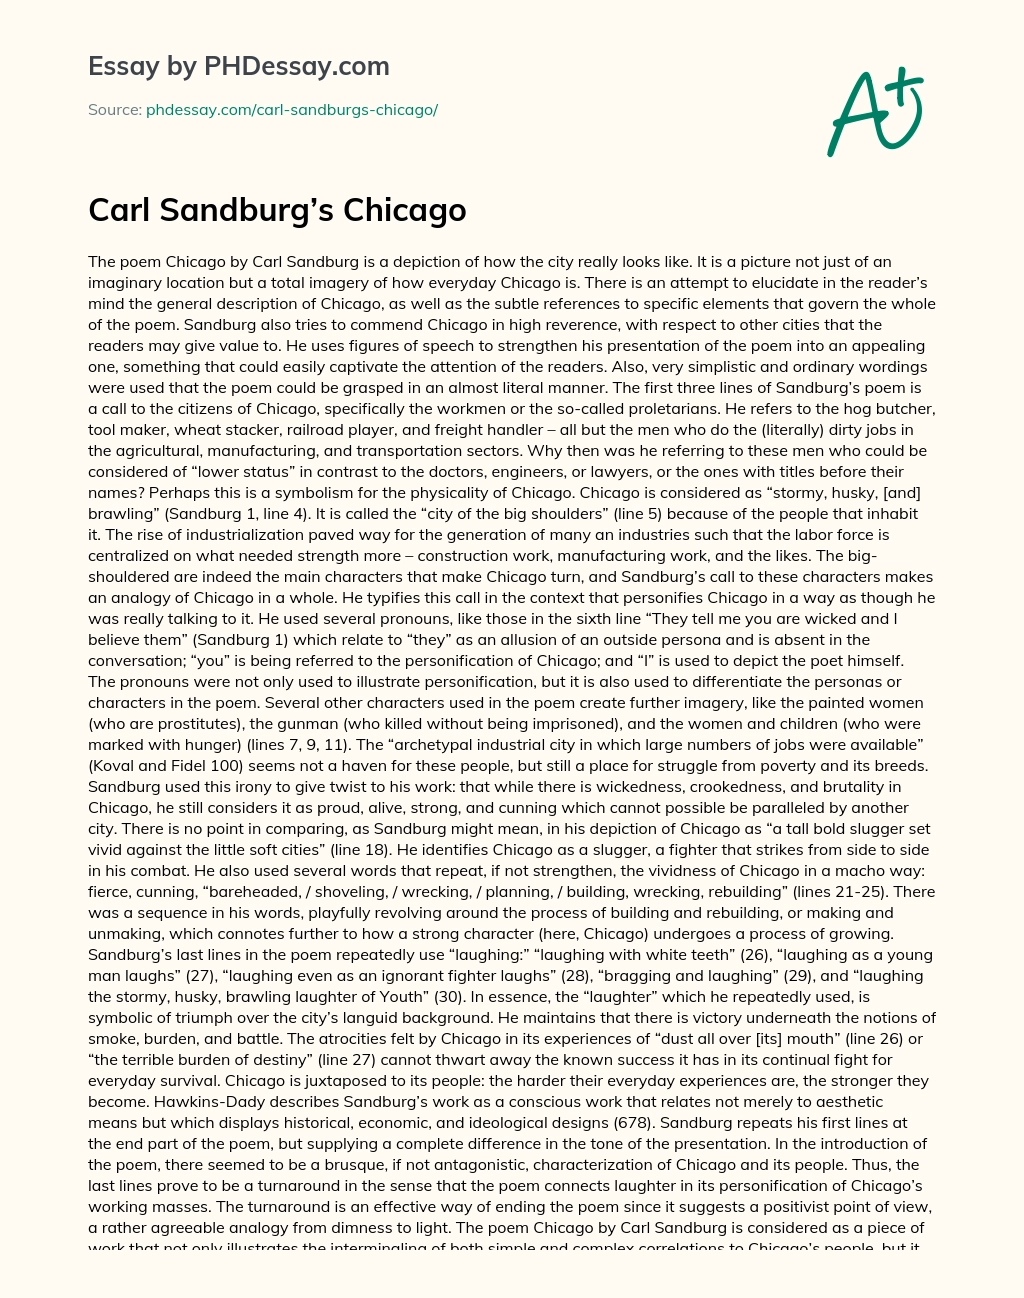 Carl Sandburg’s Chicago essay